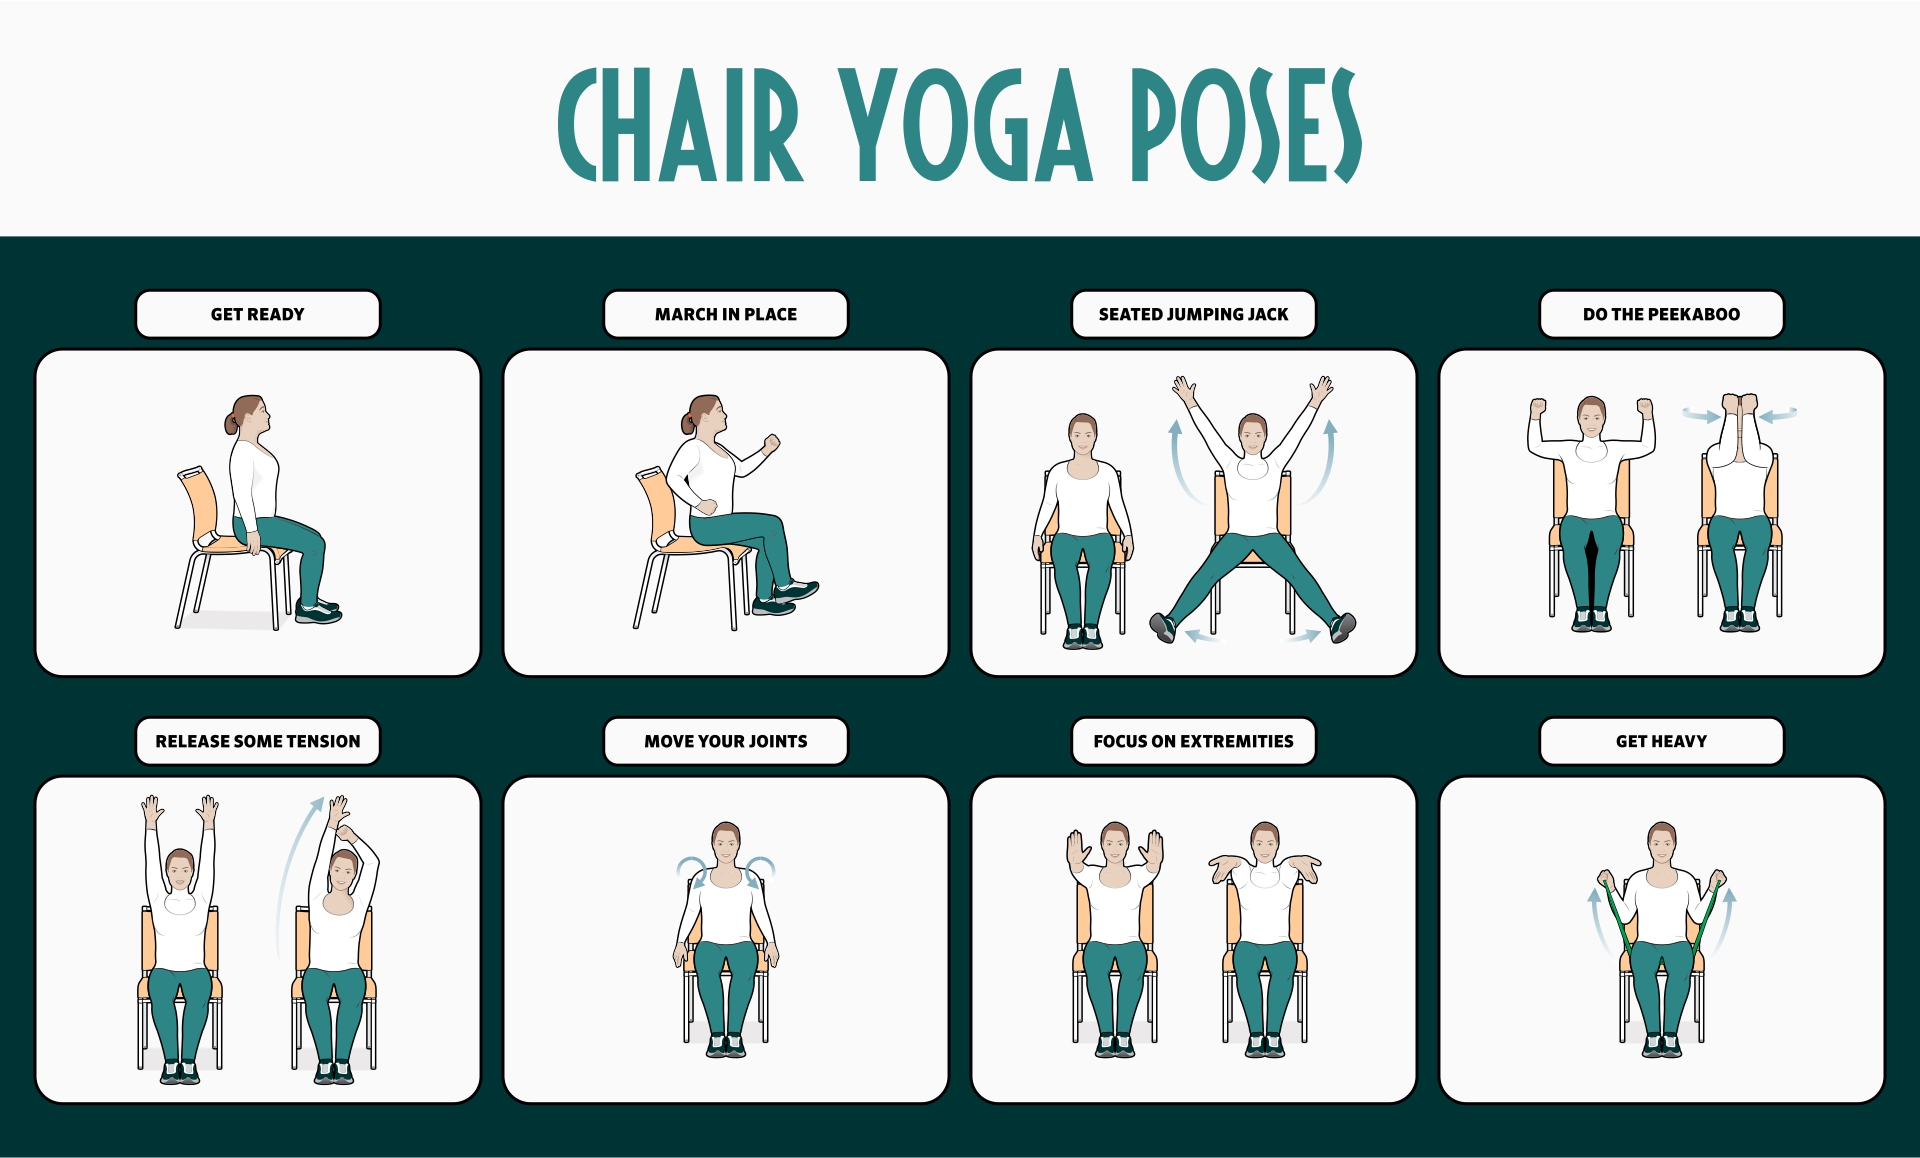 10 Best Printable Chair Exercises For Seniors - printablee.com